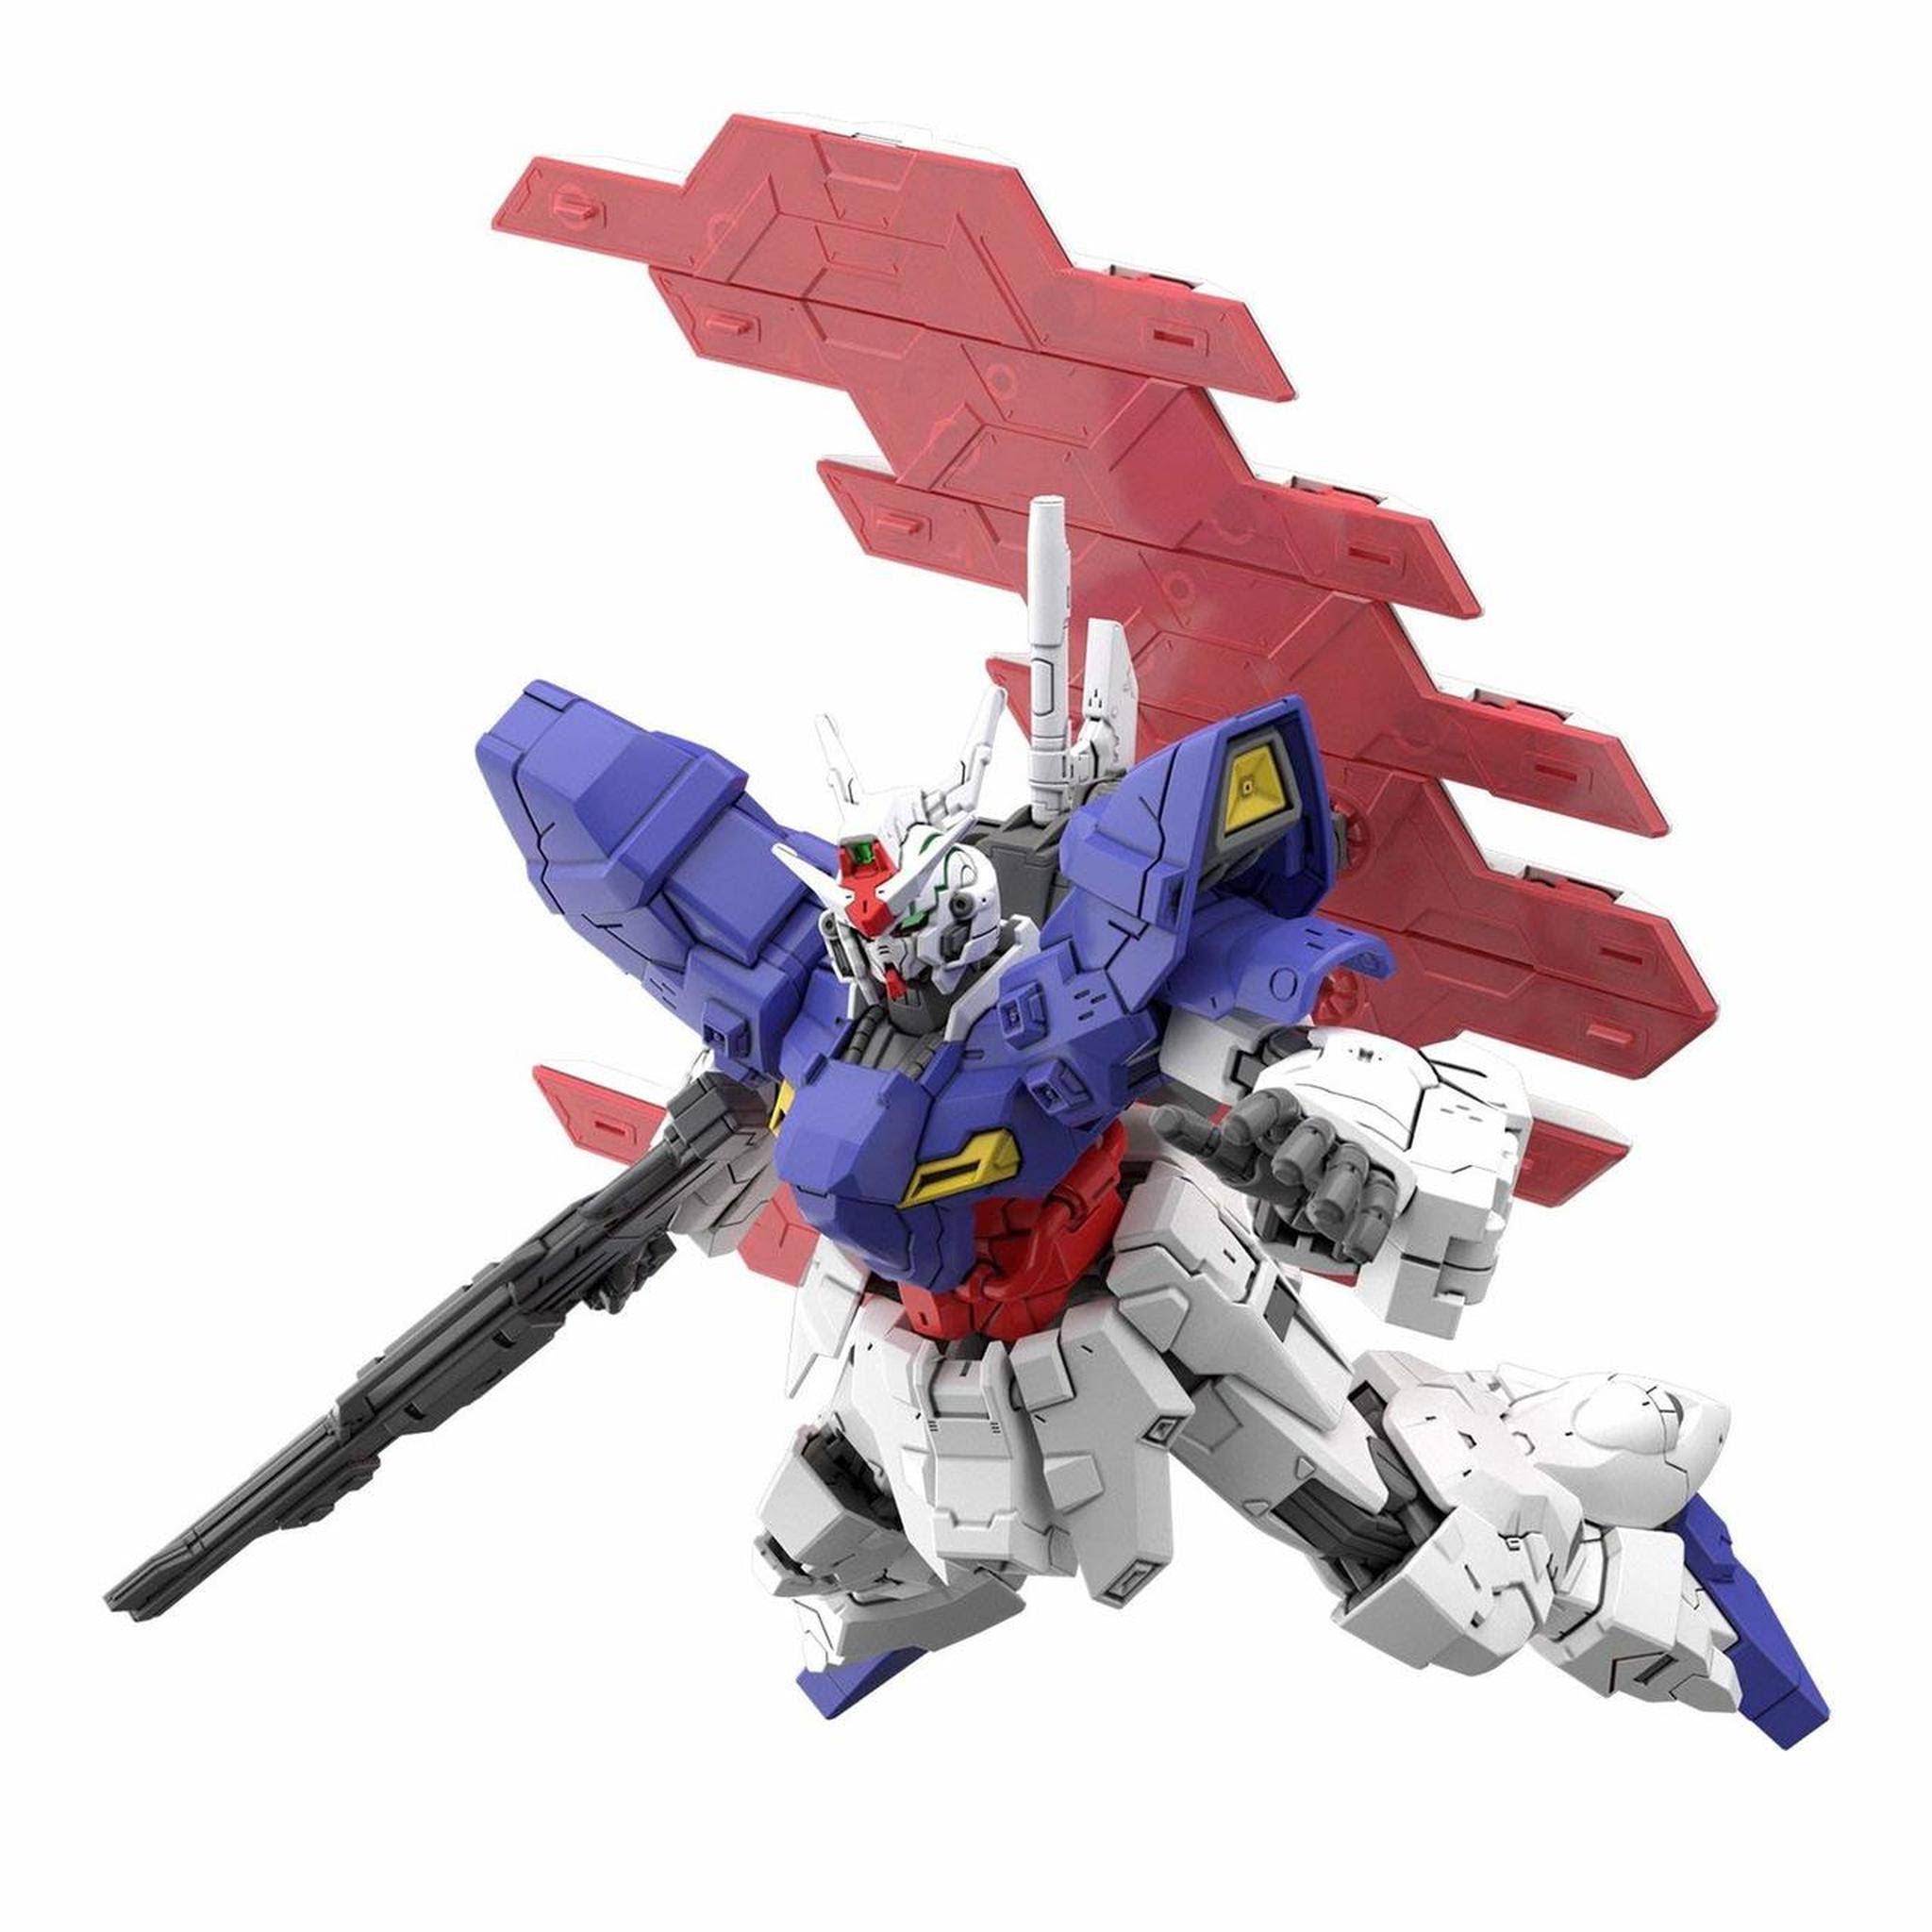 Bandai Moon Gundam Model Kit - 1/144 Scale